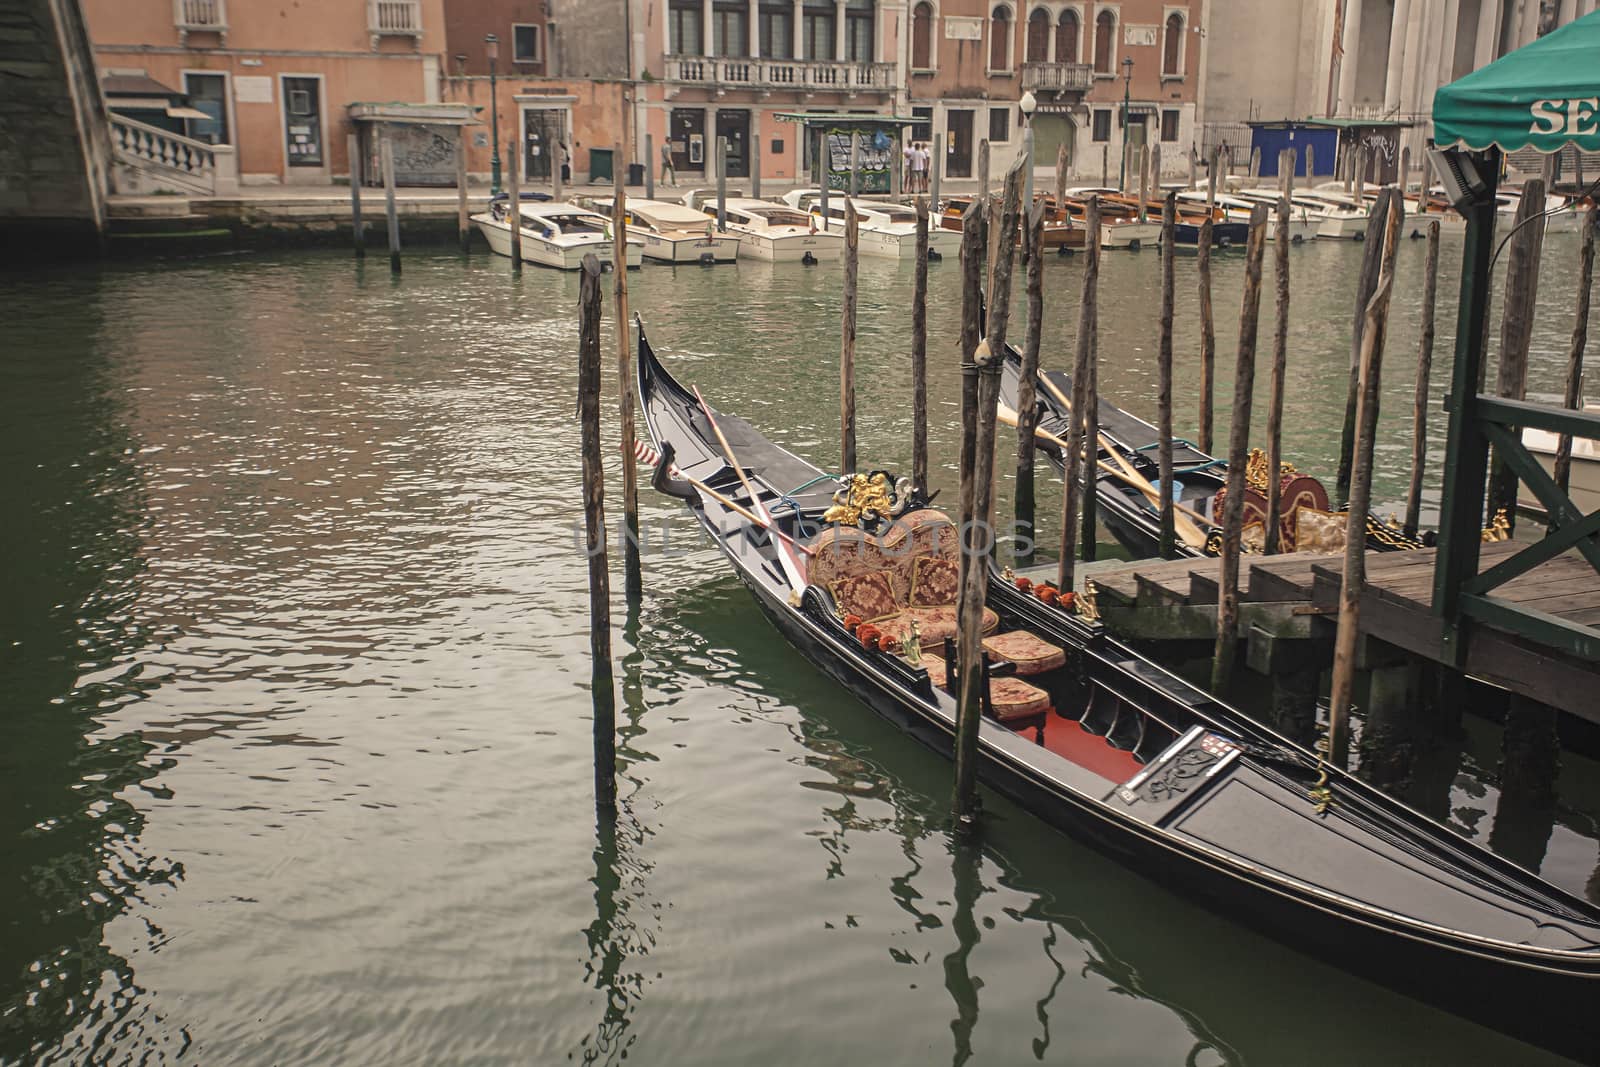 Gondolas moored in Venice by pippocarlot